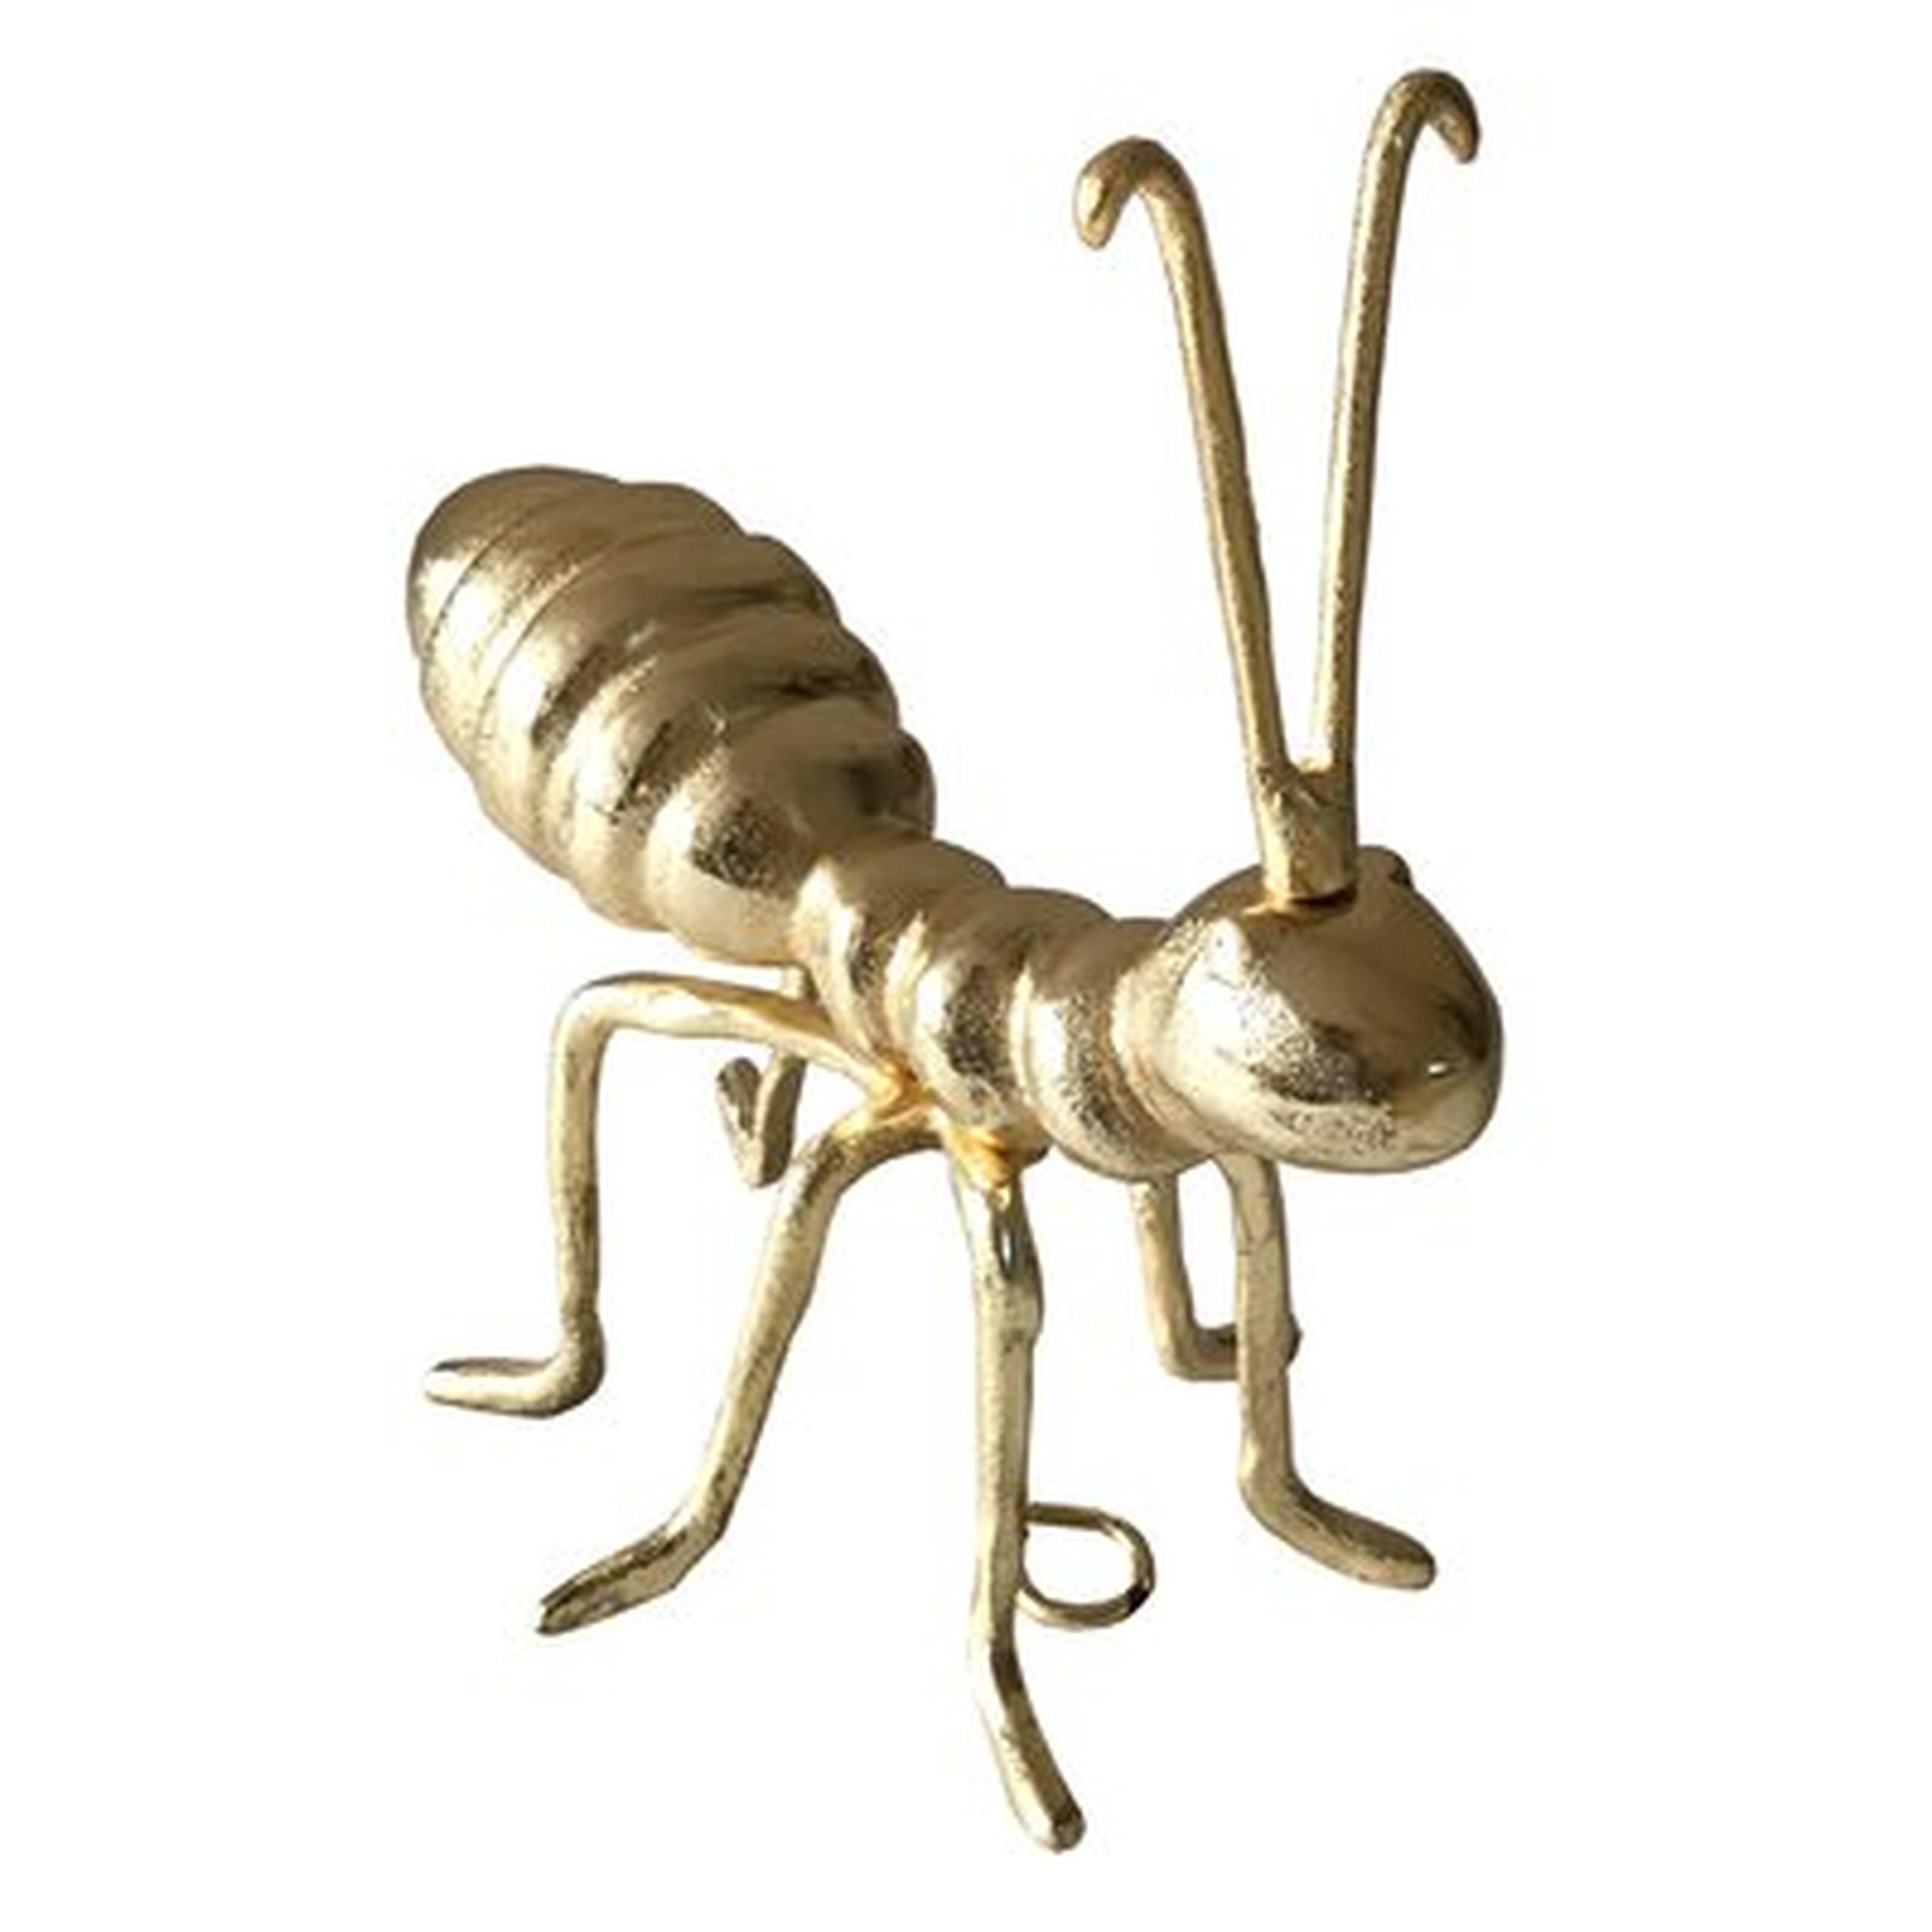 Sebiorn Decorative Ant Statuette, Gold - Wayfair